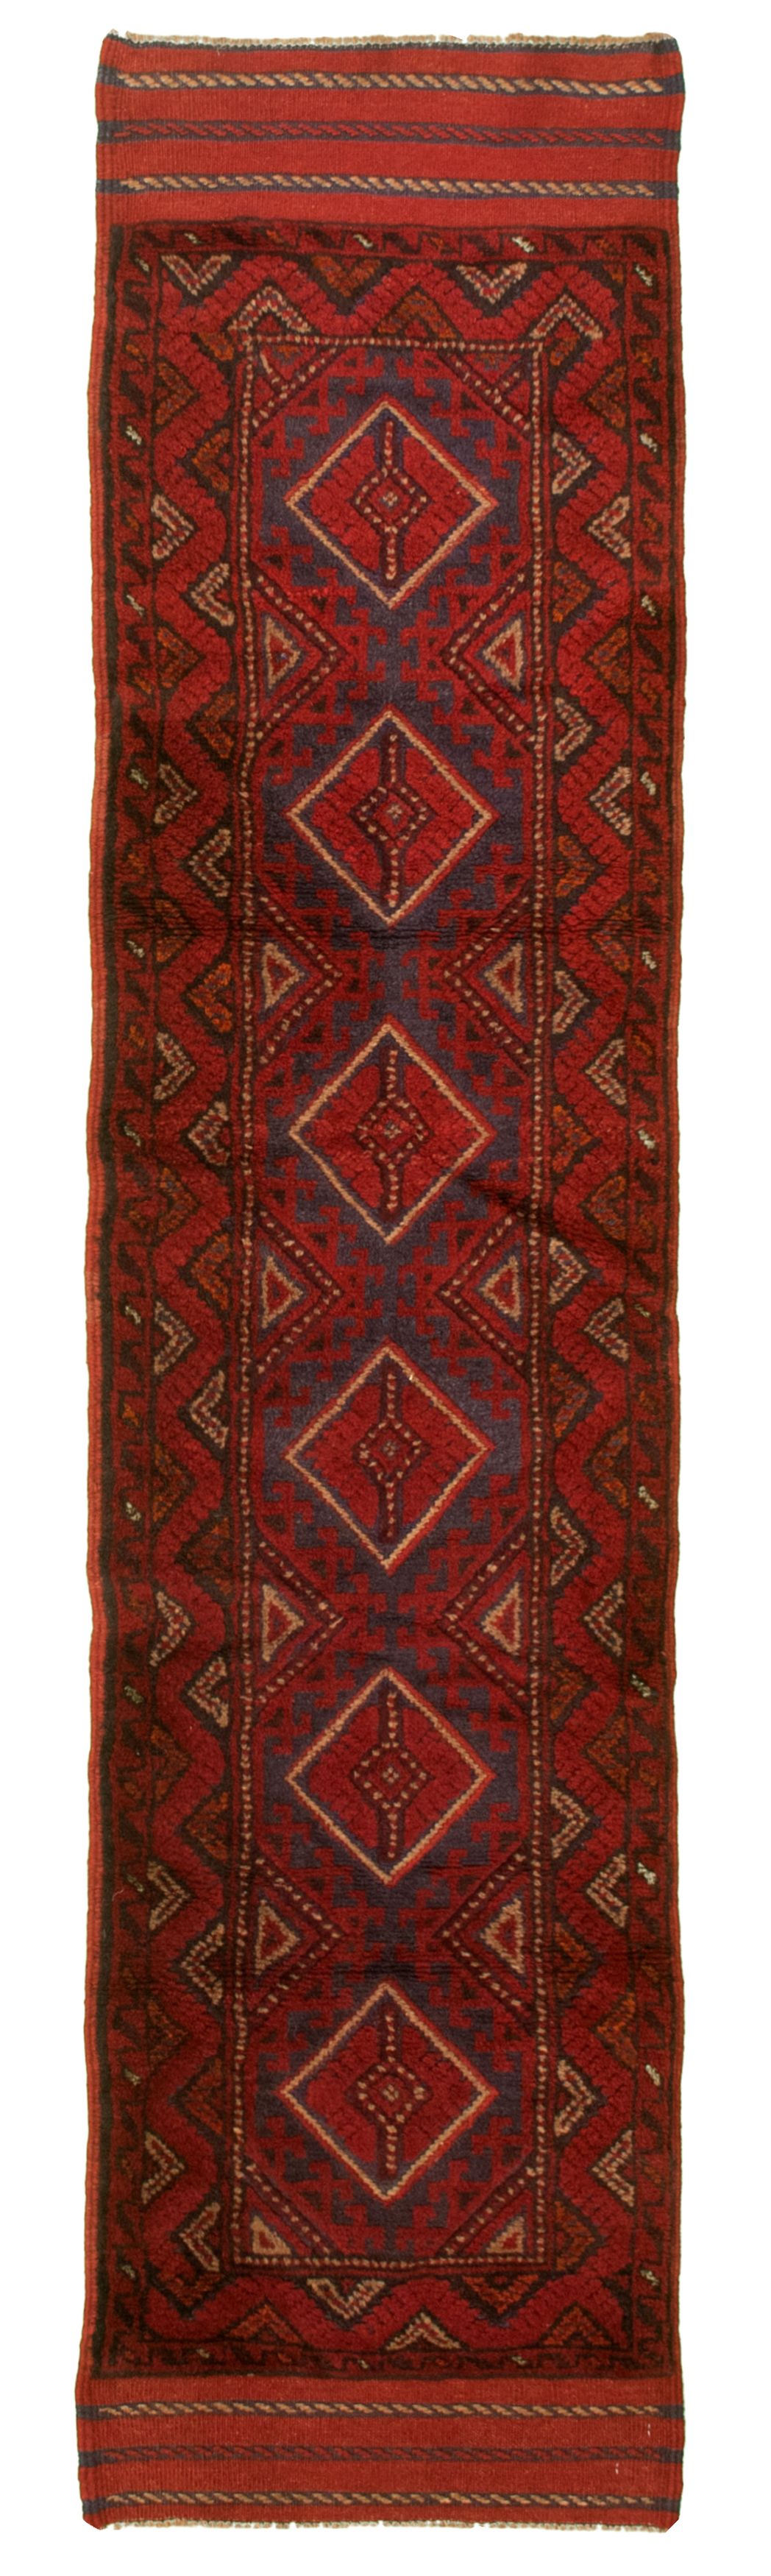 Hand-knotted Tajik Caucasian Red Wool Rug 2'0" x 8'3" (20) Size: 2'0" x 8'3"  